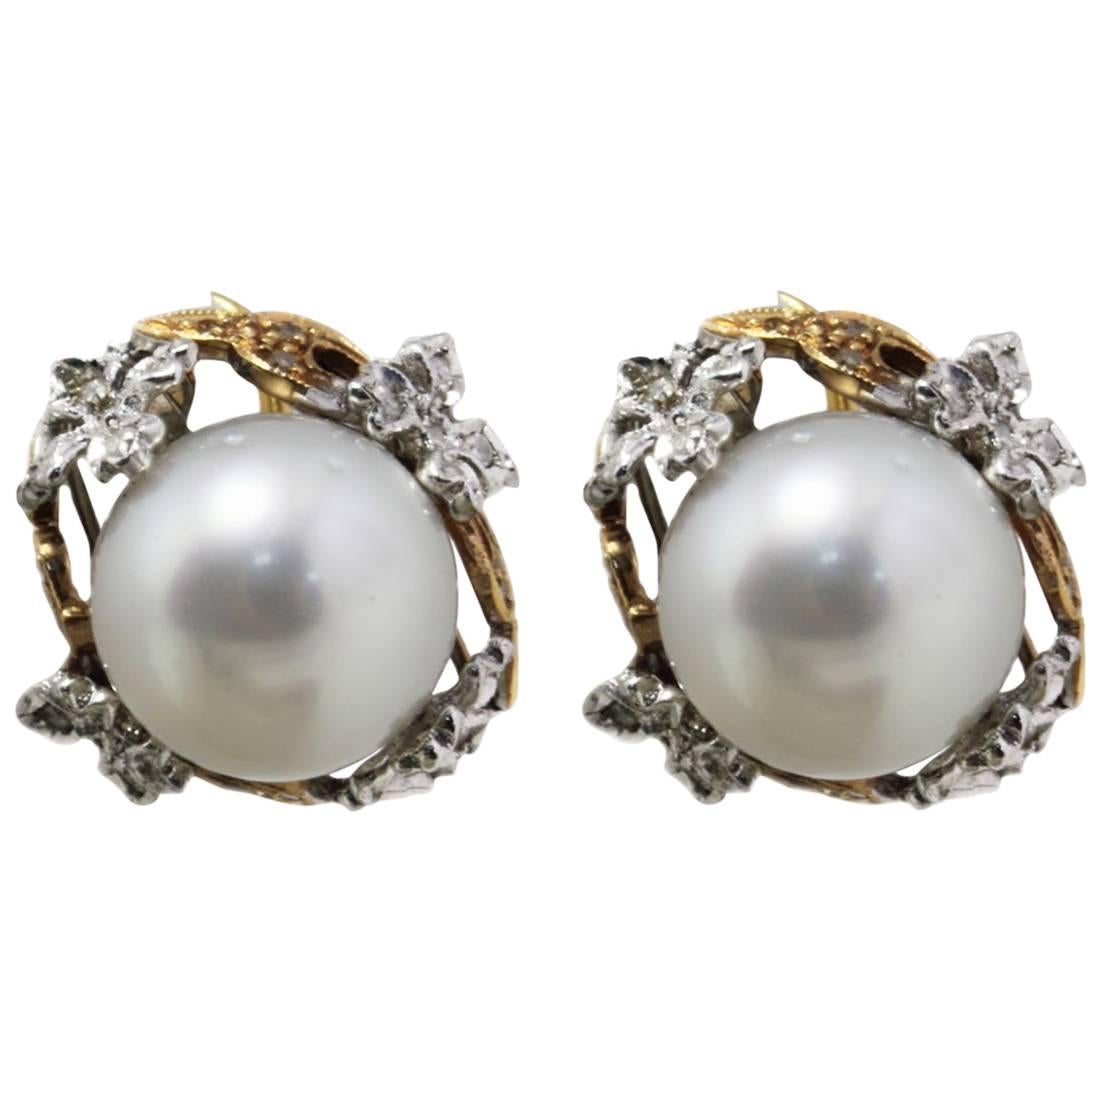 Luise Australian Pearl and Diamonds Stud Earrings